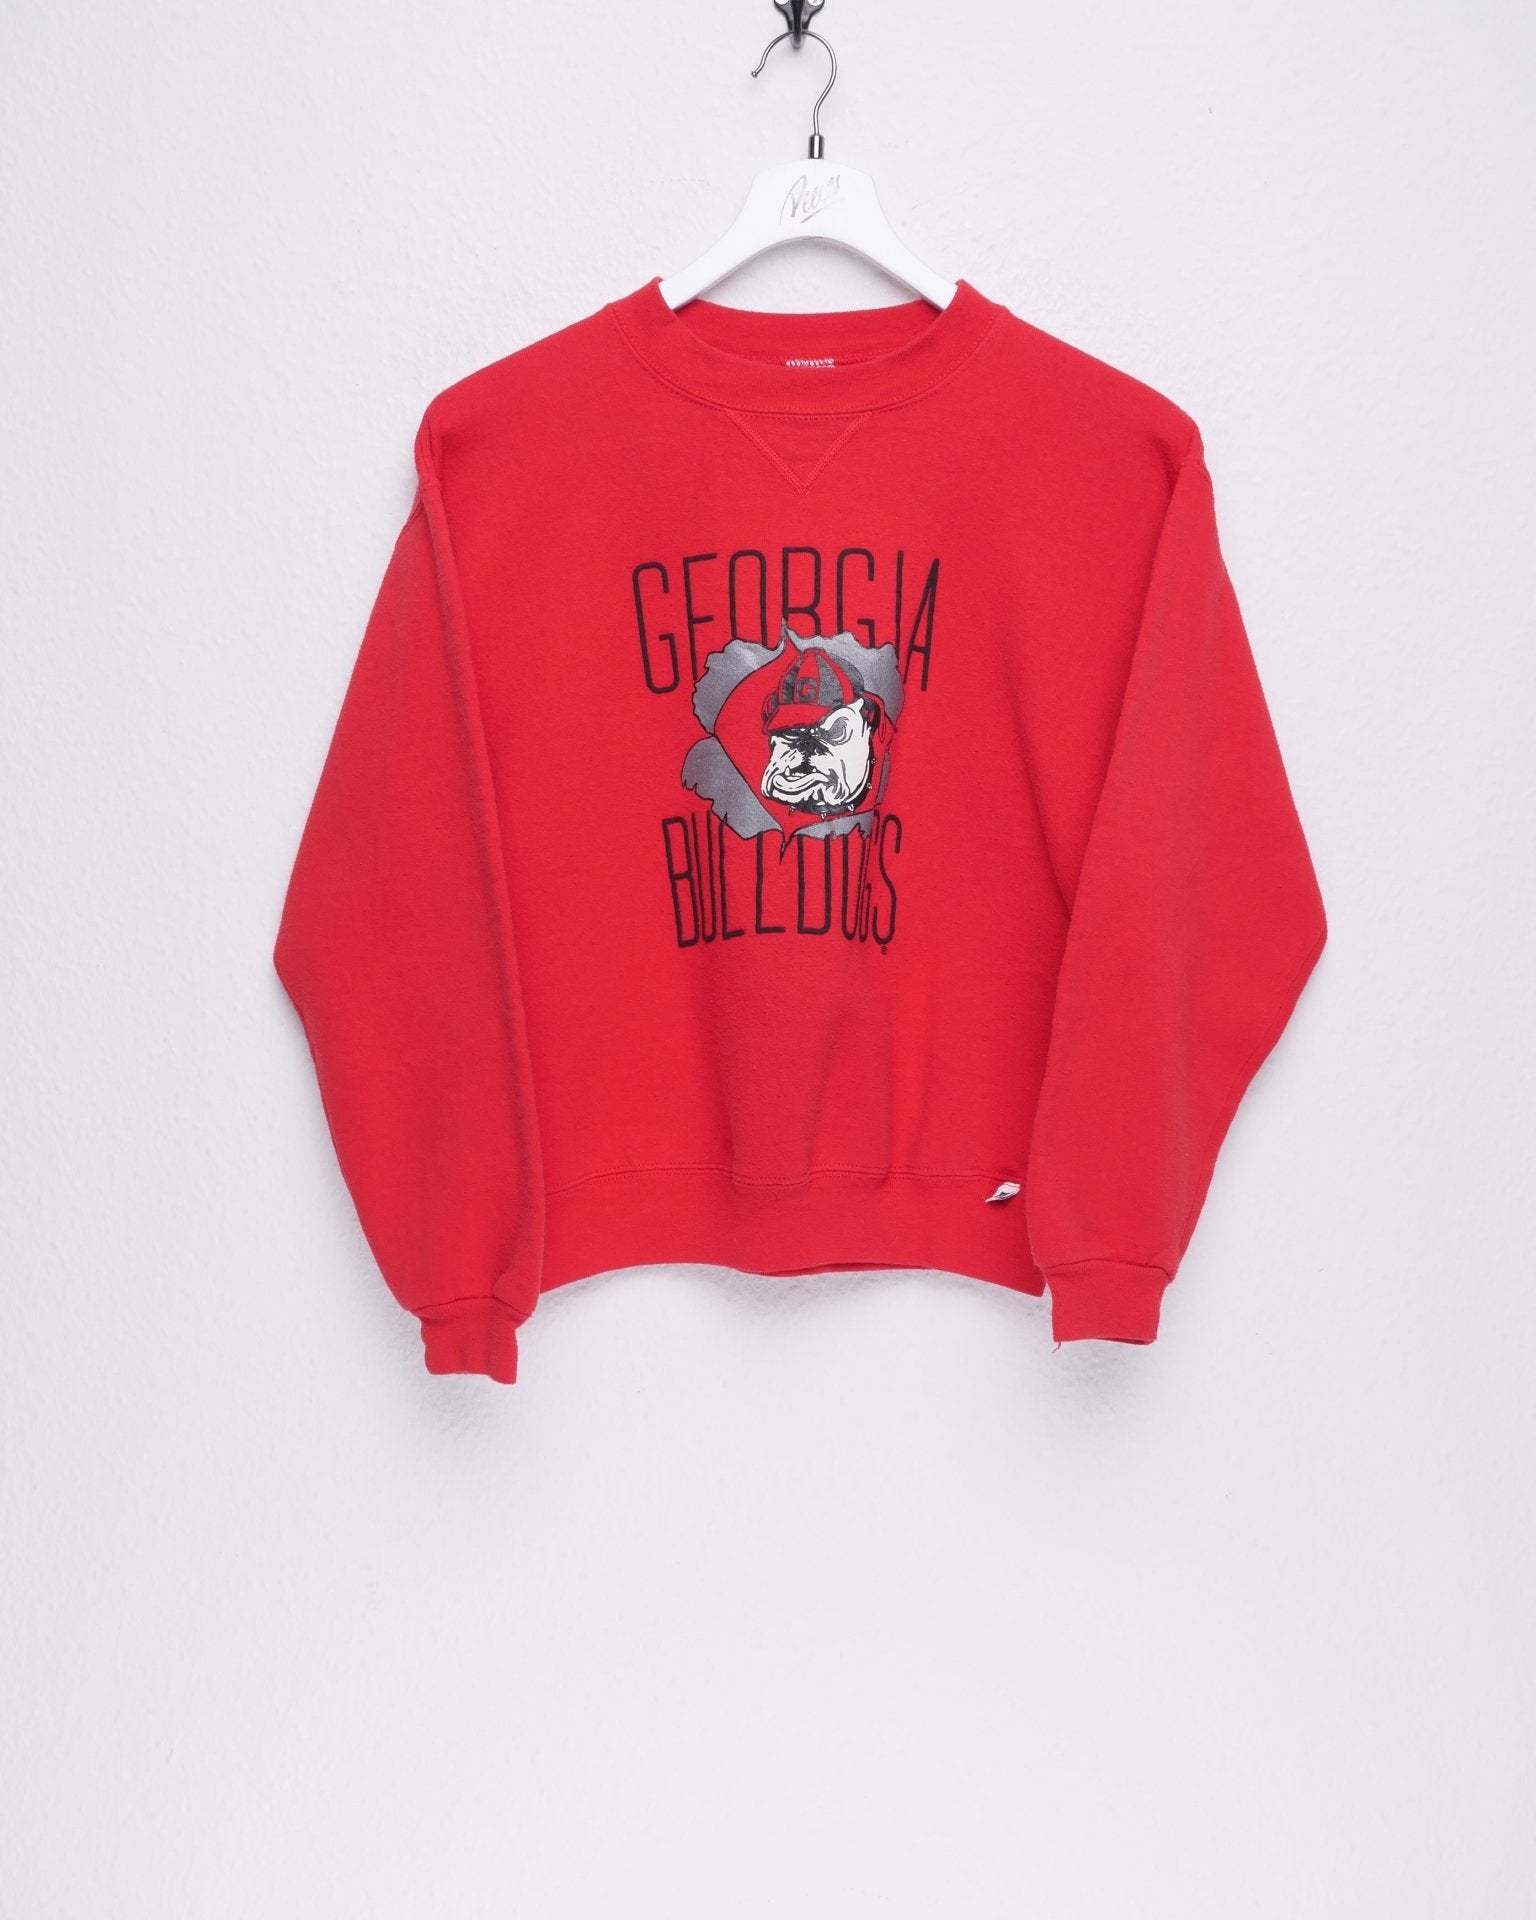 University Football 'Georgia Bulldogs' printed Graphic red Sweater - Peeces